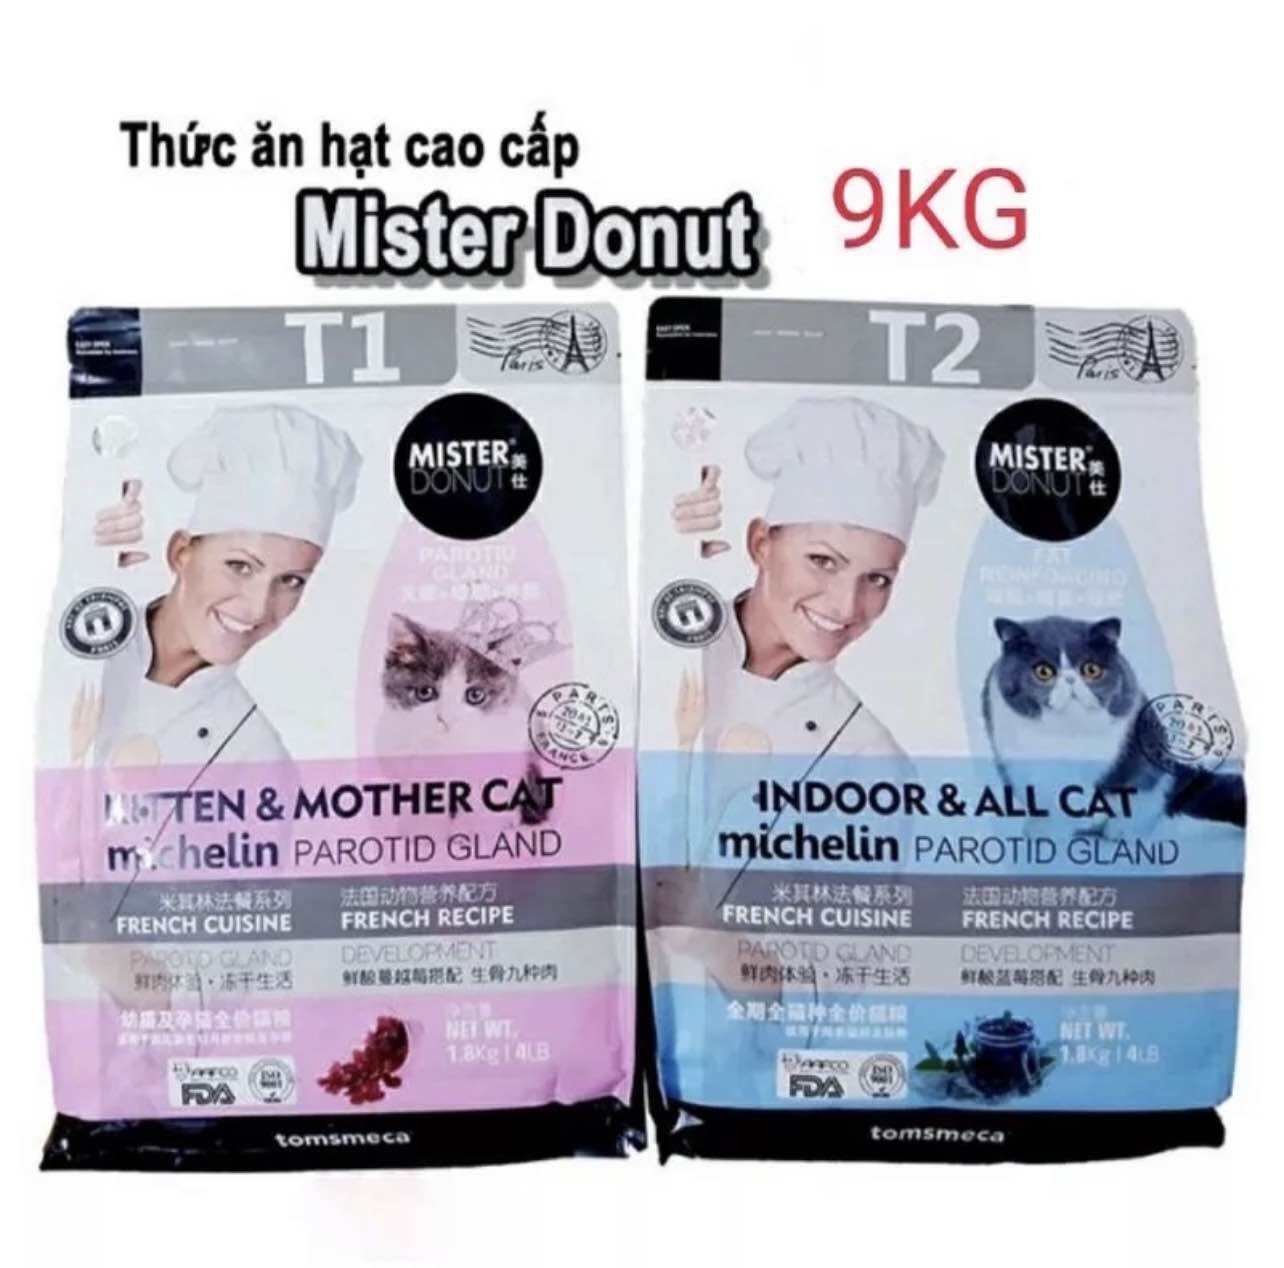 Hạt cao cấp Mister Donut 9kg